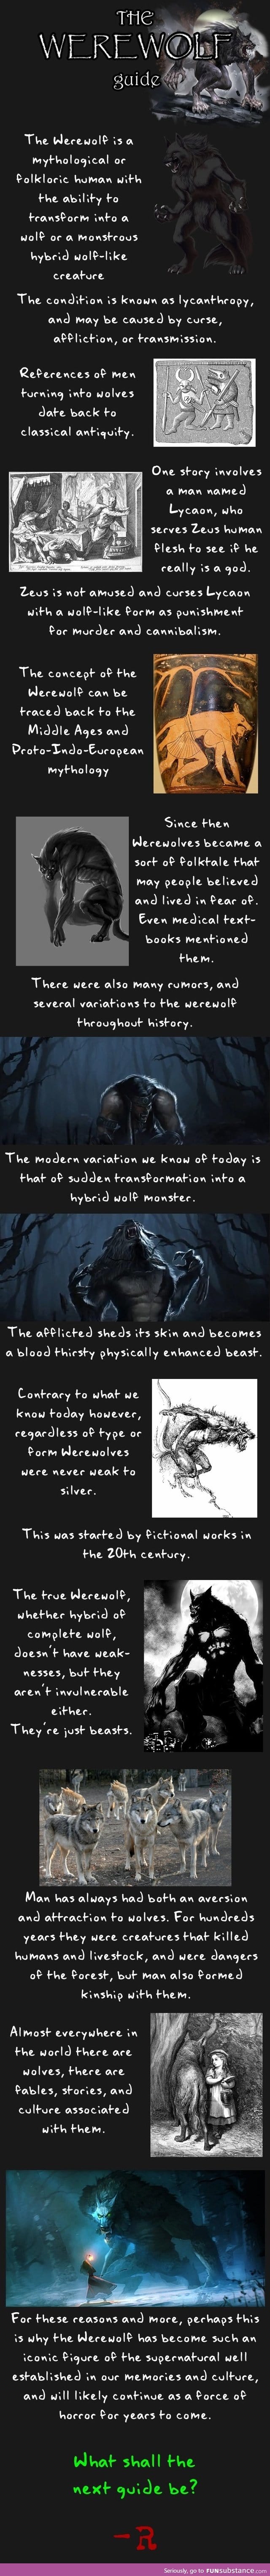 The werewolf guide